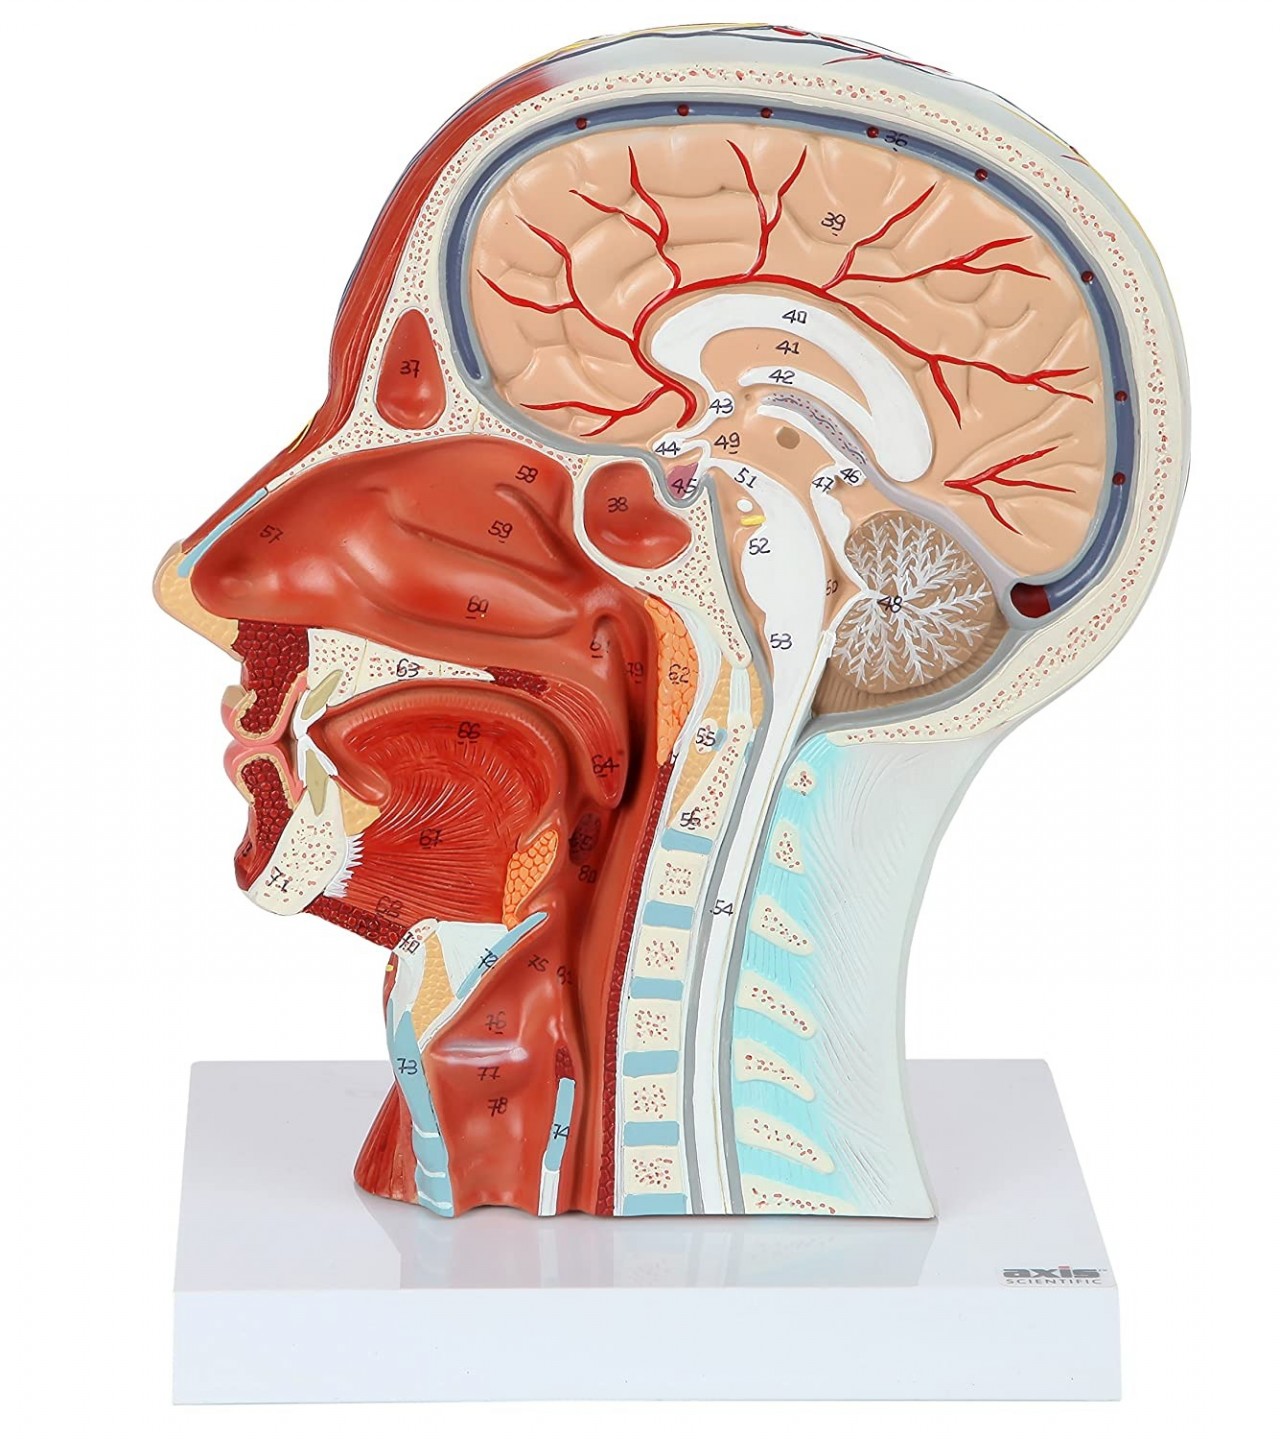 Human Head Model | Anatomy Model Features Half Head, Muscular